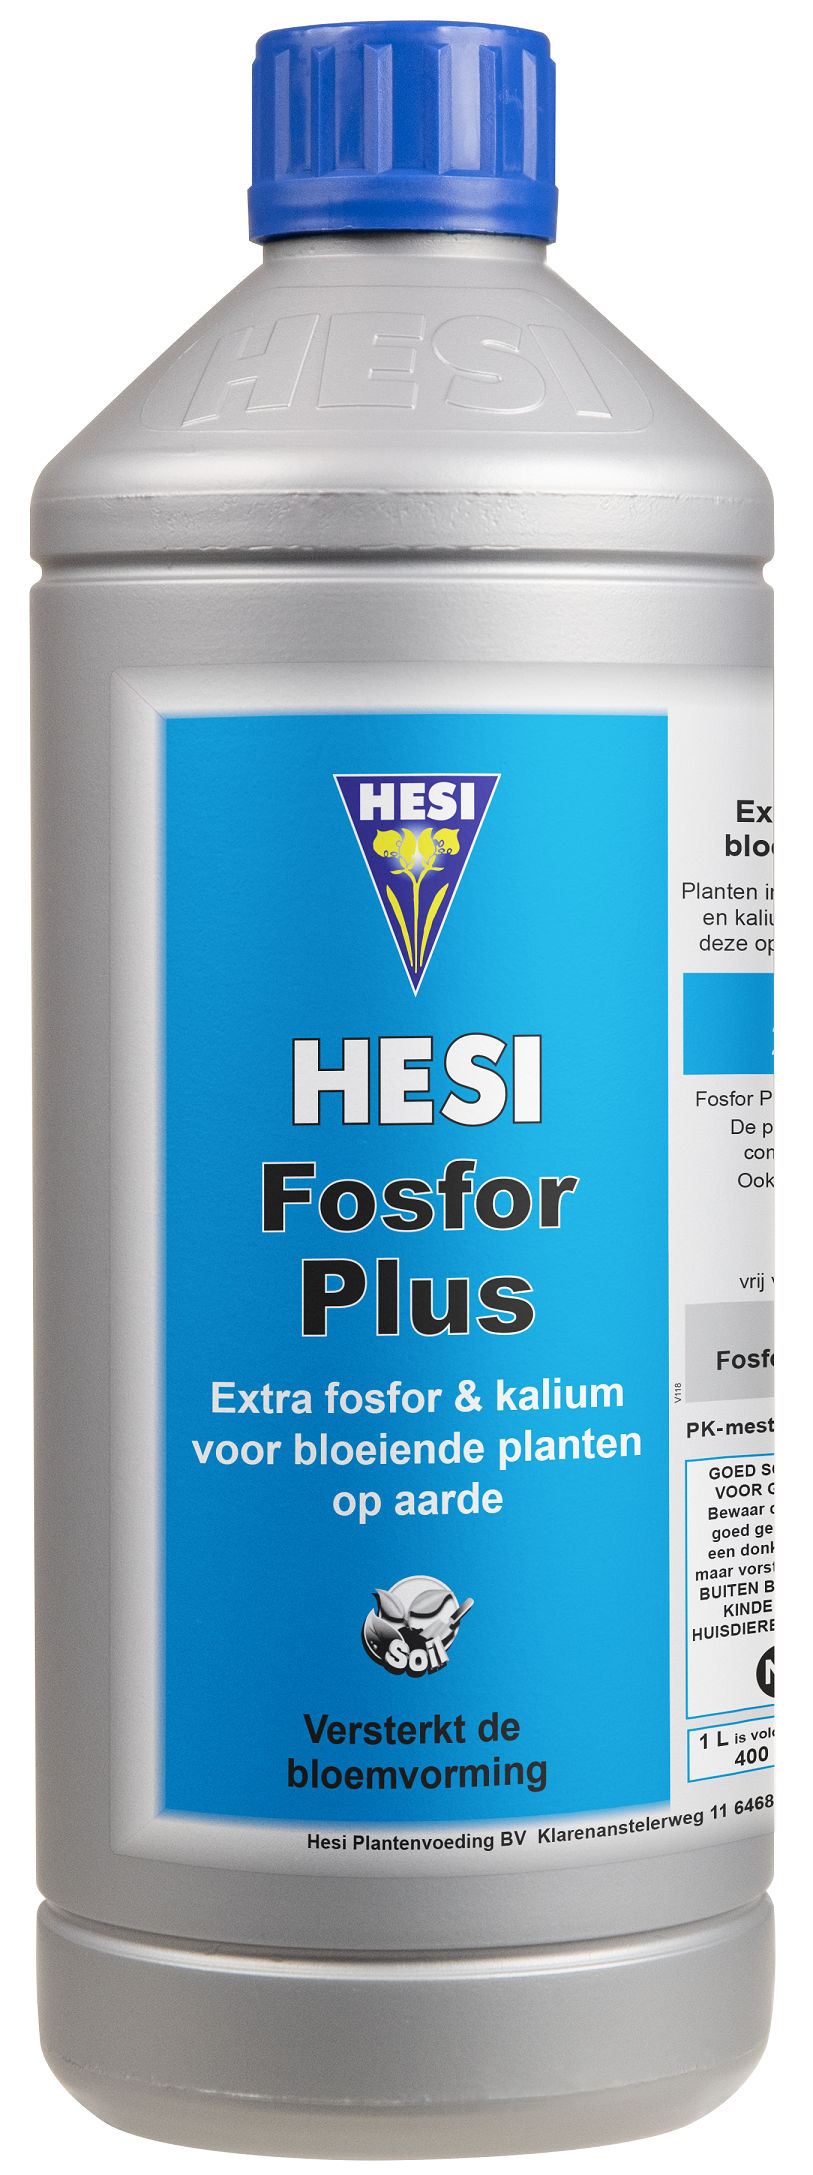 Hesi Fosfor plus - 1 liter